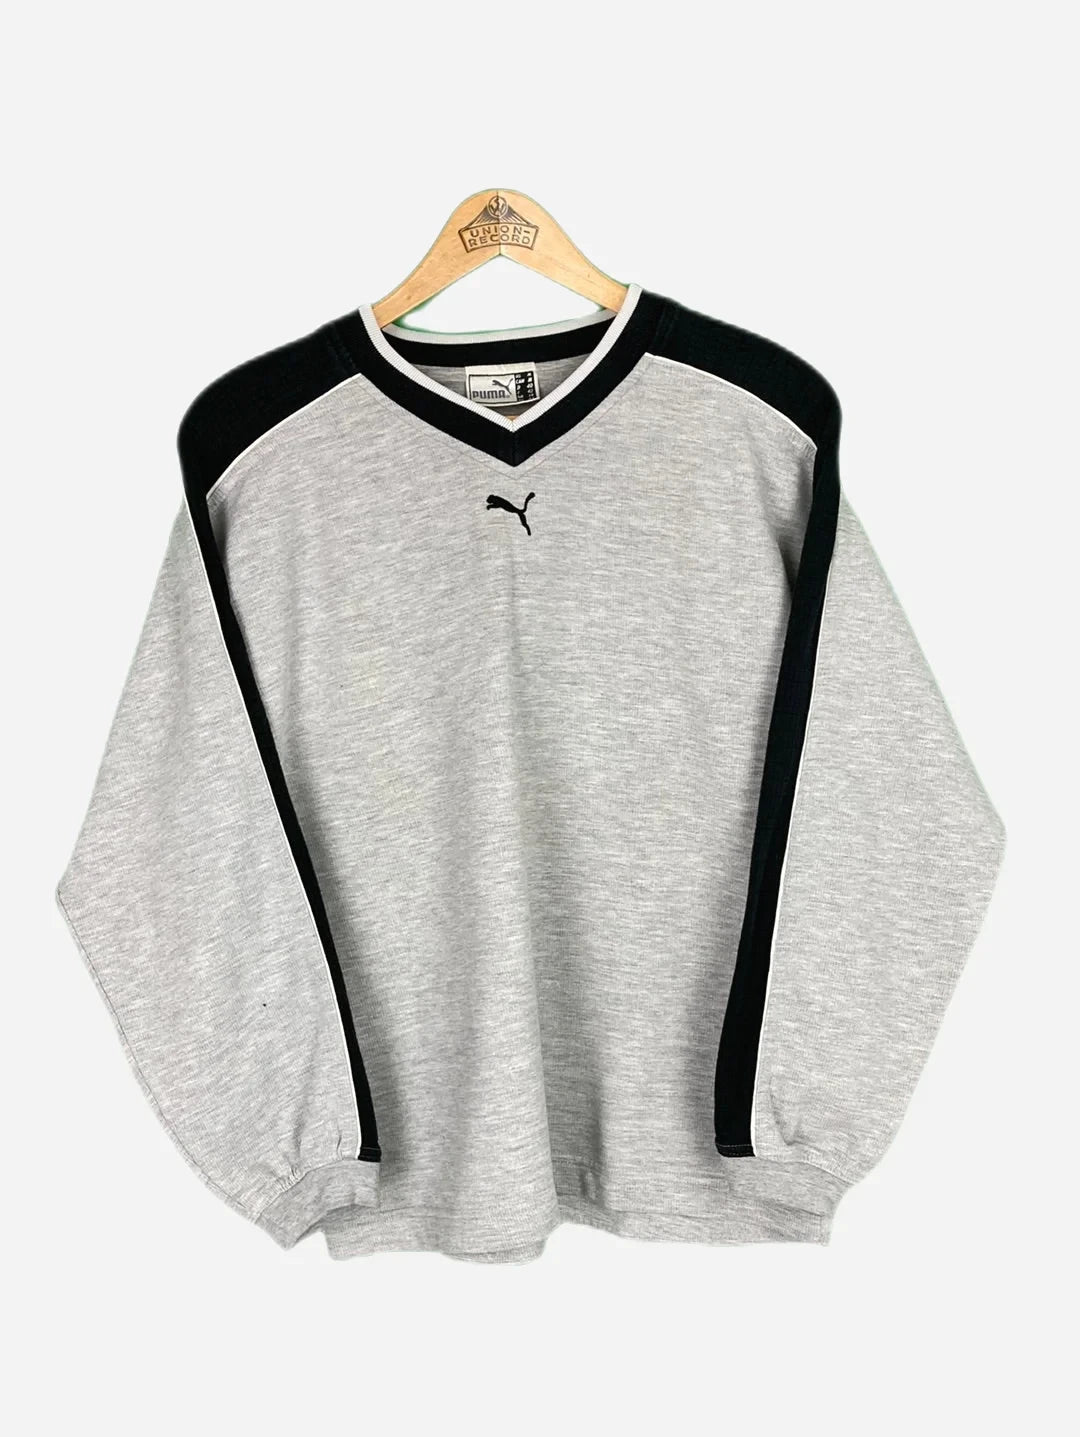 Puma Sweater (S)